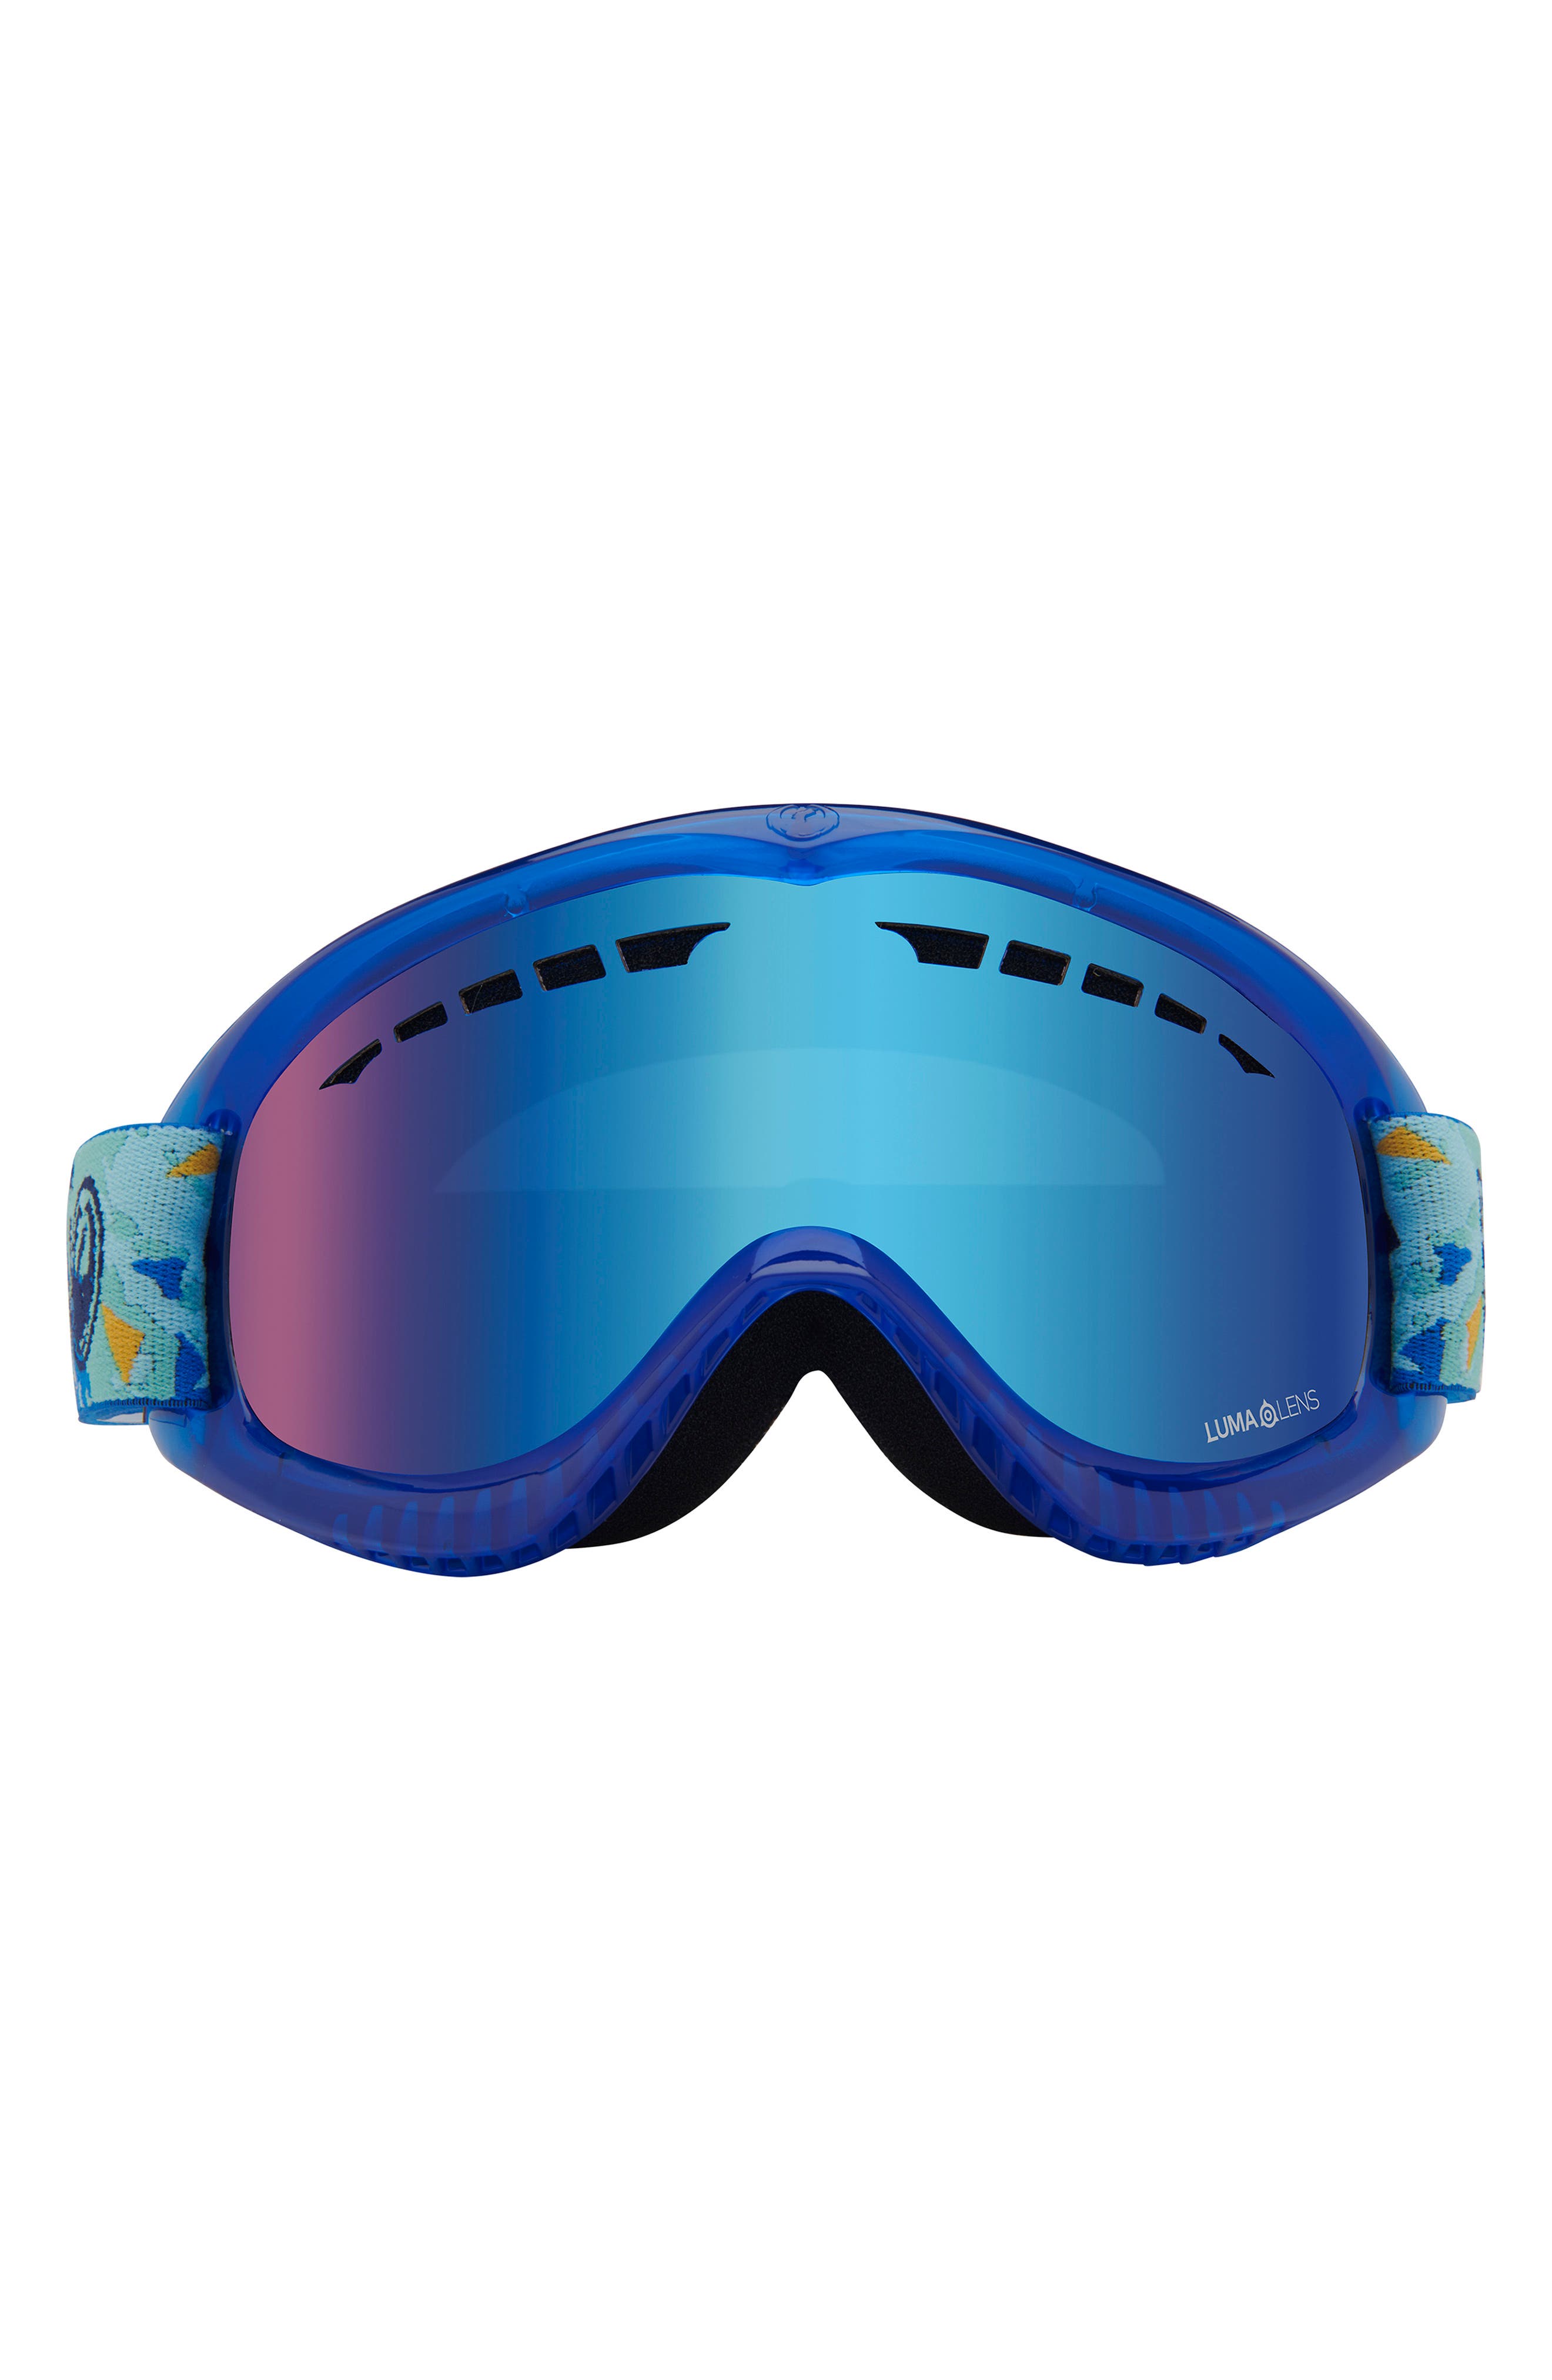 Sale Price! Many Colors Brand NEW Dragon DX Snowboard / Snow / Ski Goggles 